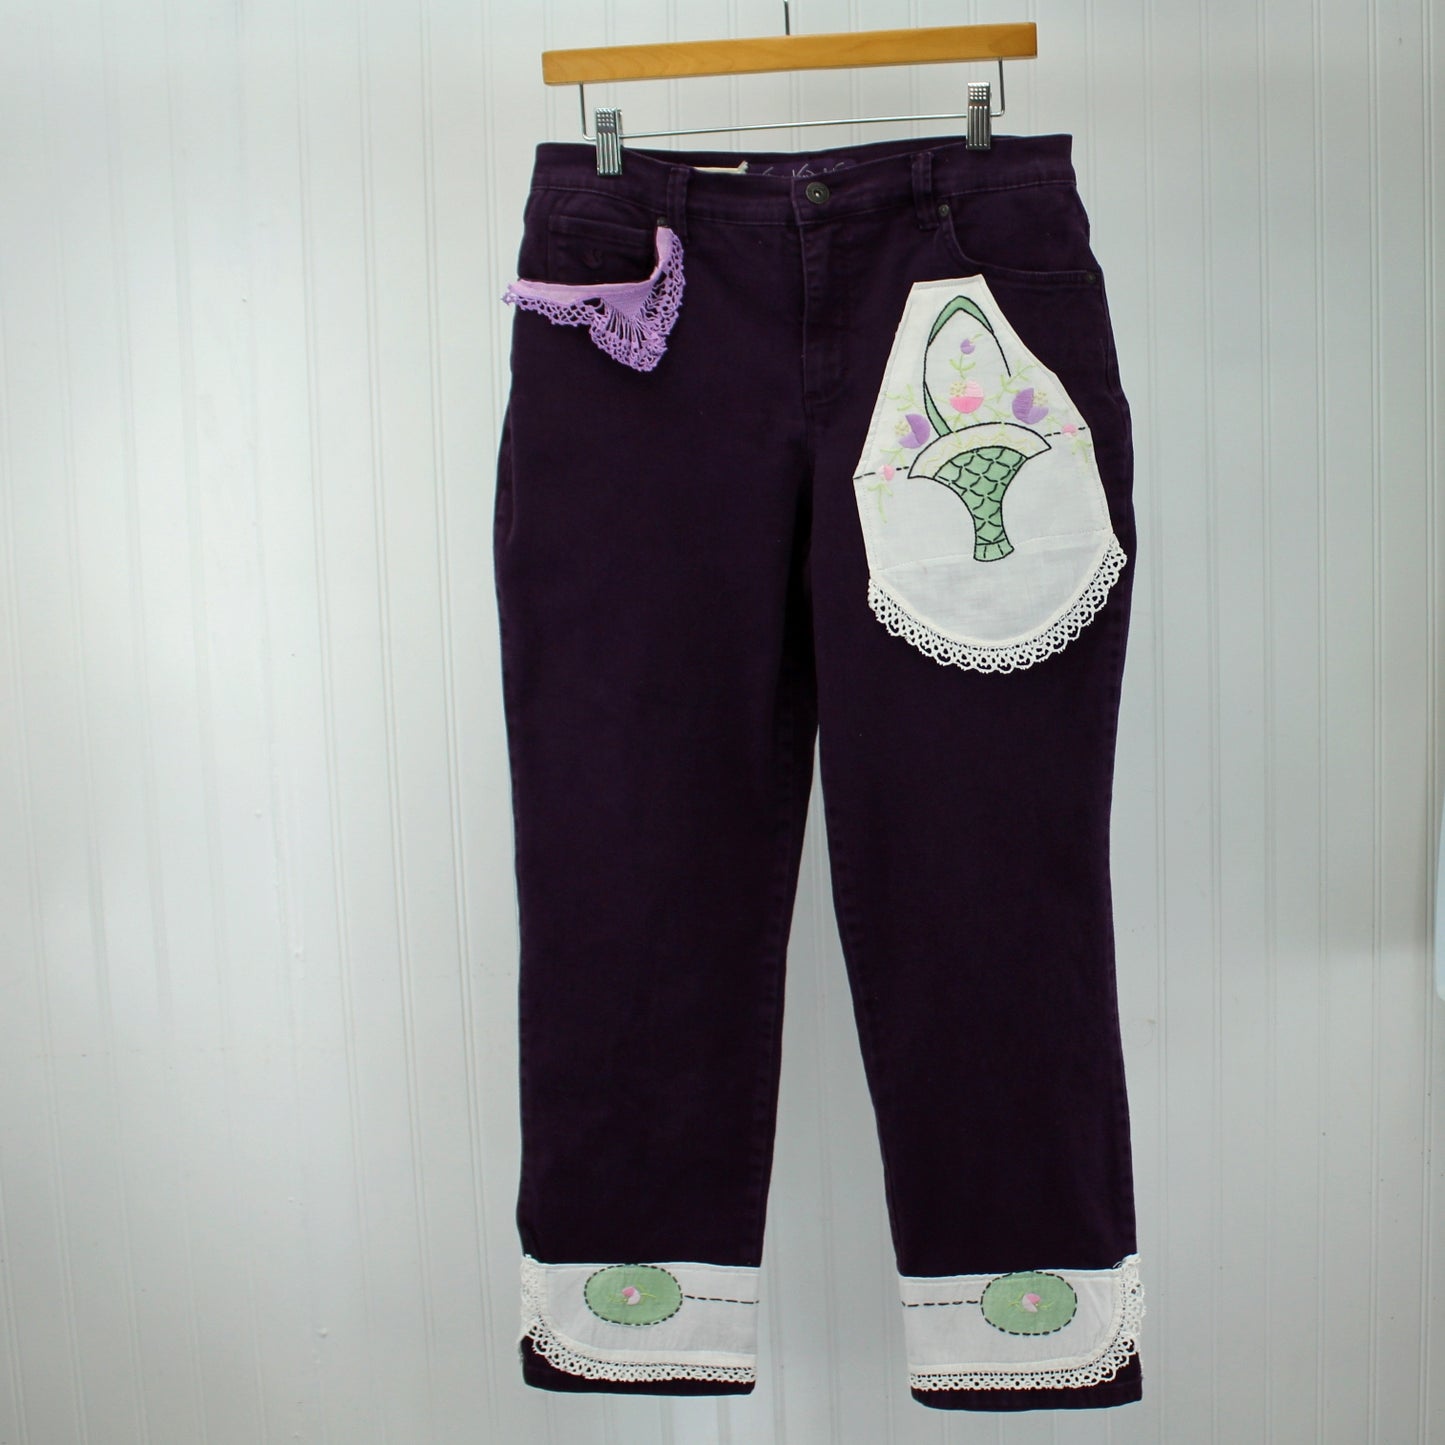 Gloria Vanderbilt Purple Jeans Patzi Design Embroidery Flower Basket Size 8 Short decorated front and back